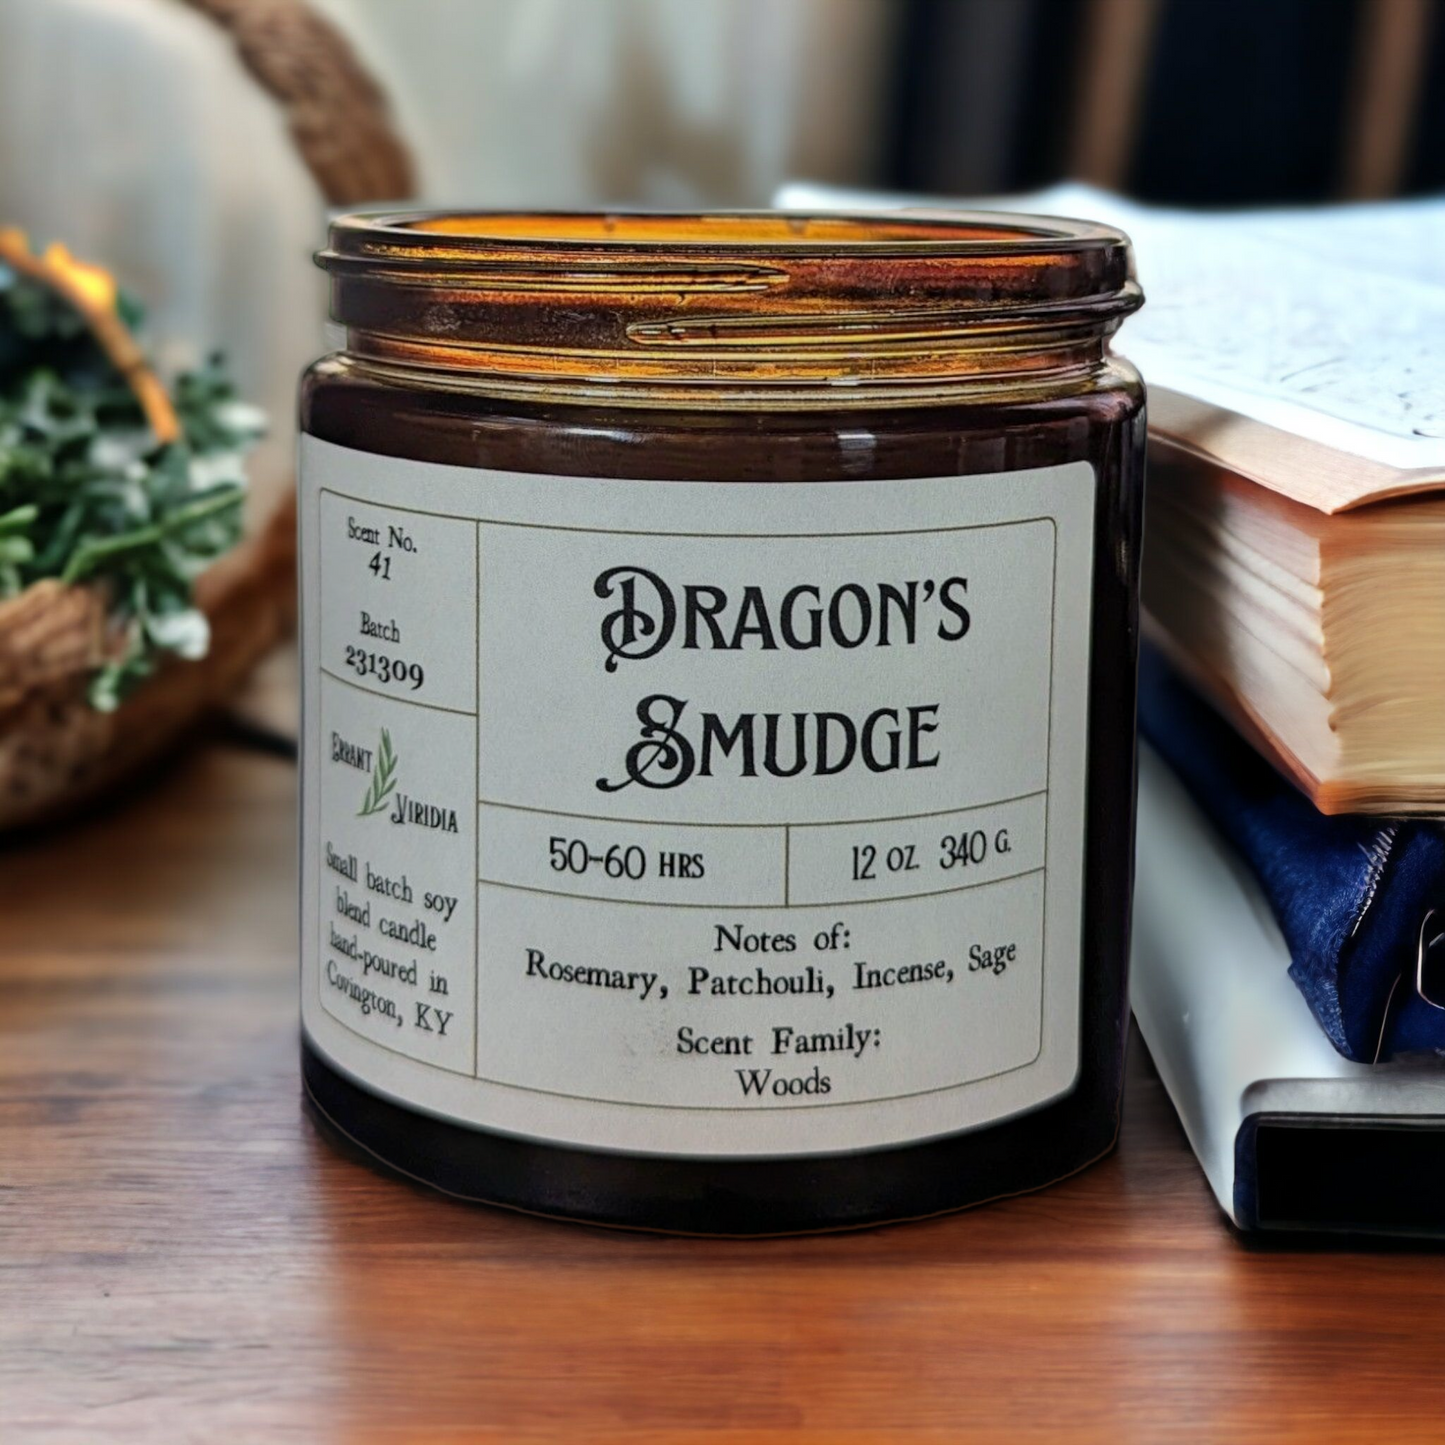 Dragon's Smudge